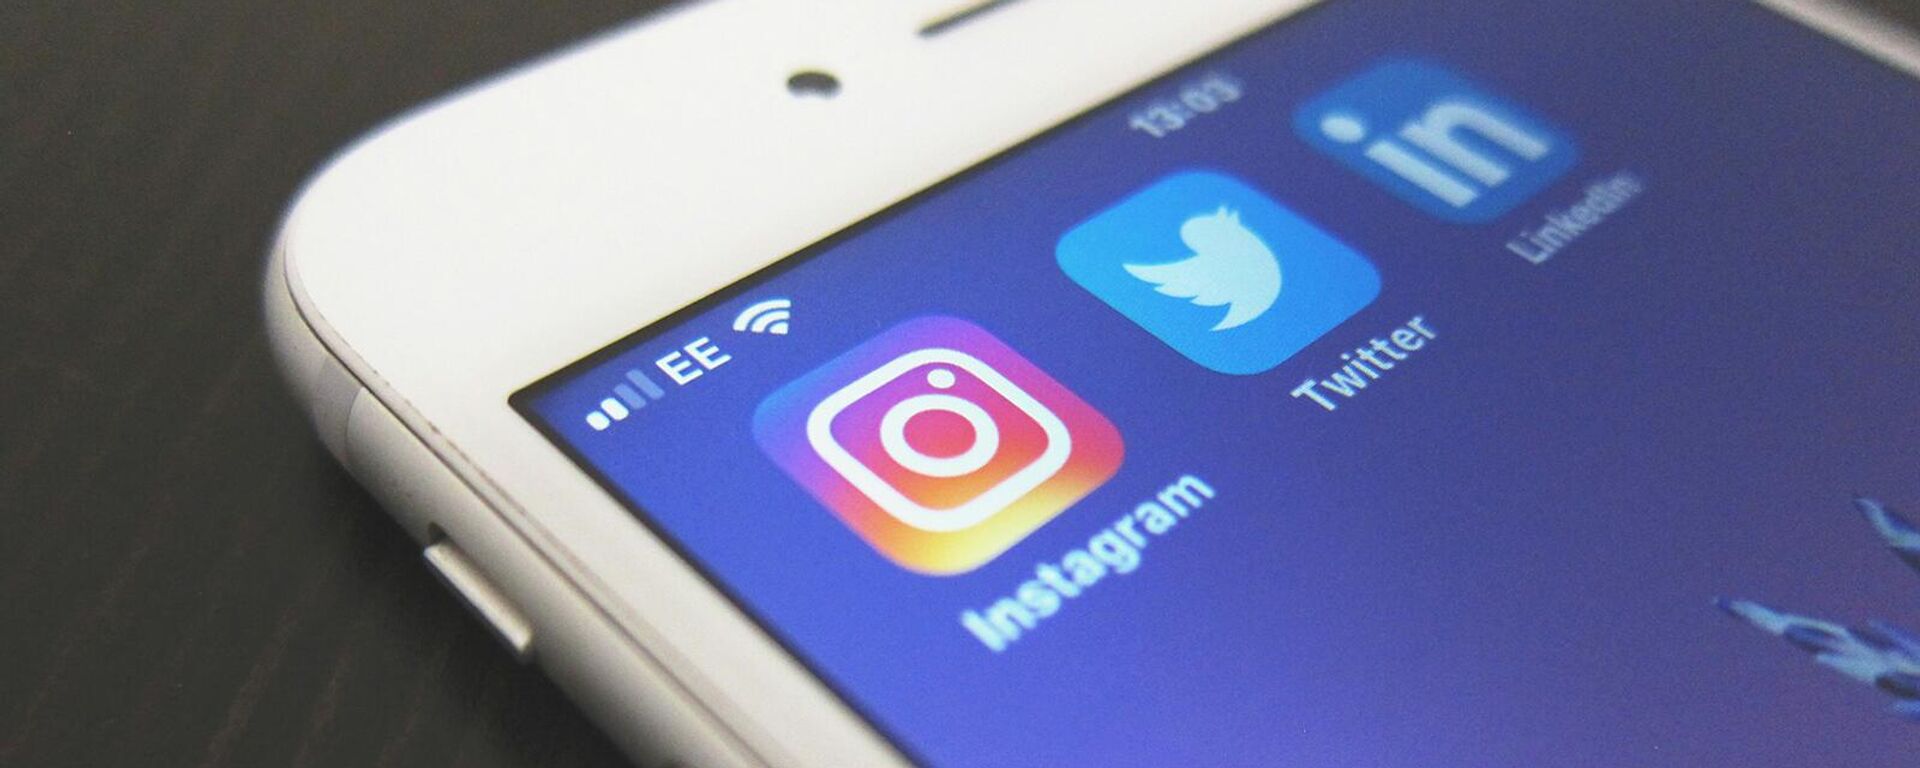 Смартфон с иконками приложений Instagram, Twitter и LinkedIn - Sputnik Армения, 1920, 23.02.2021